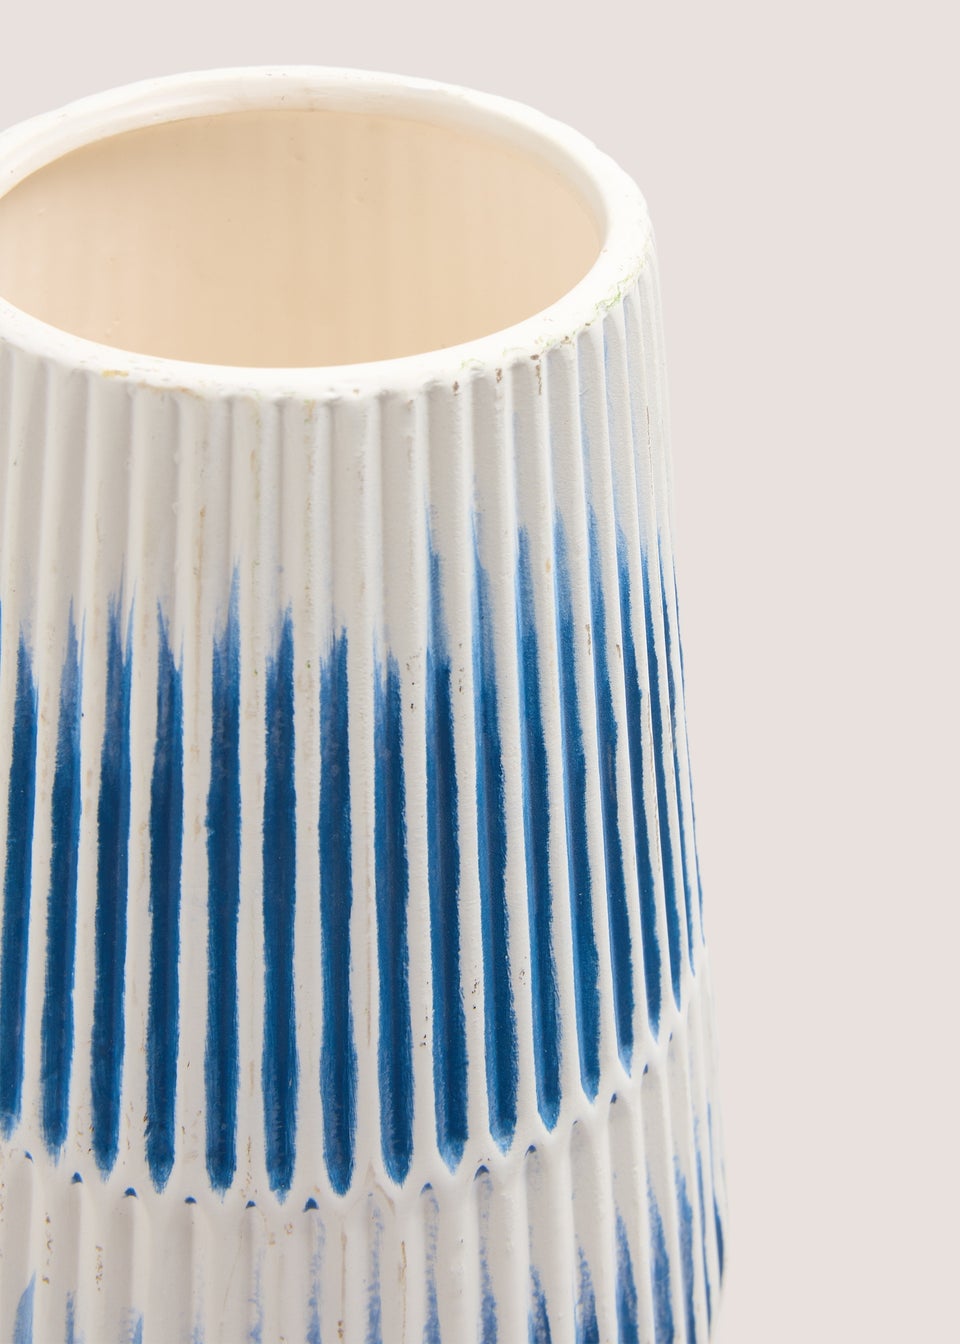 Blue Ribbed Ceramic Vase (26cm x 16cm x 16cm)